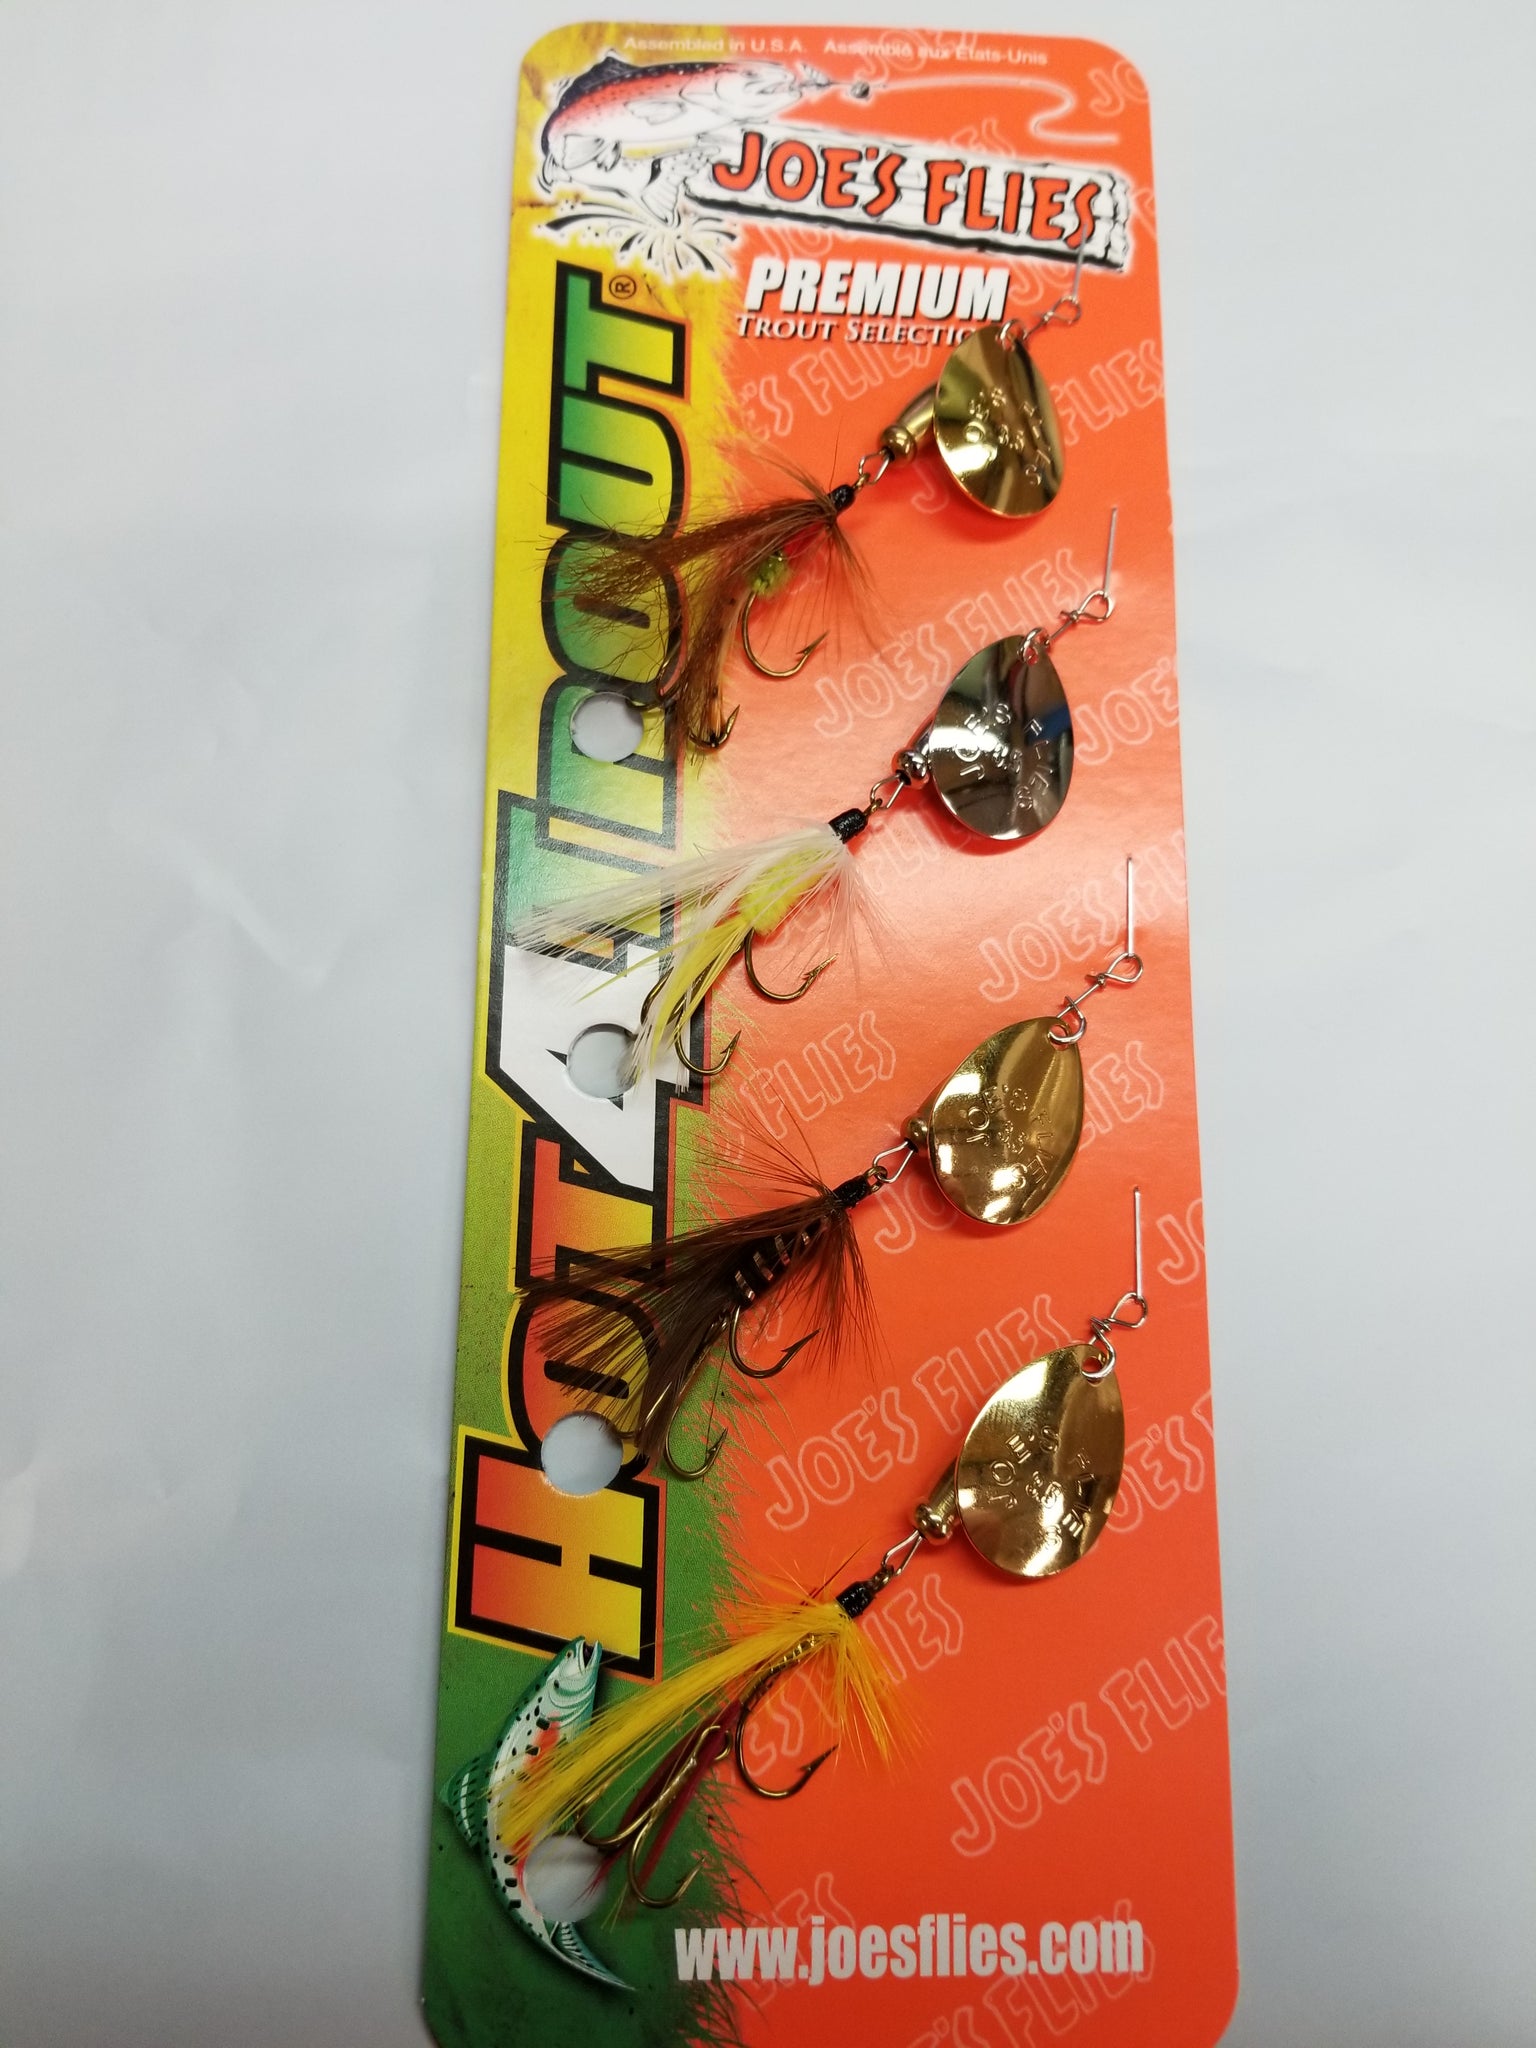 The Joe's Flies Hot-4-Trout 4 pack!